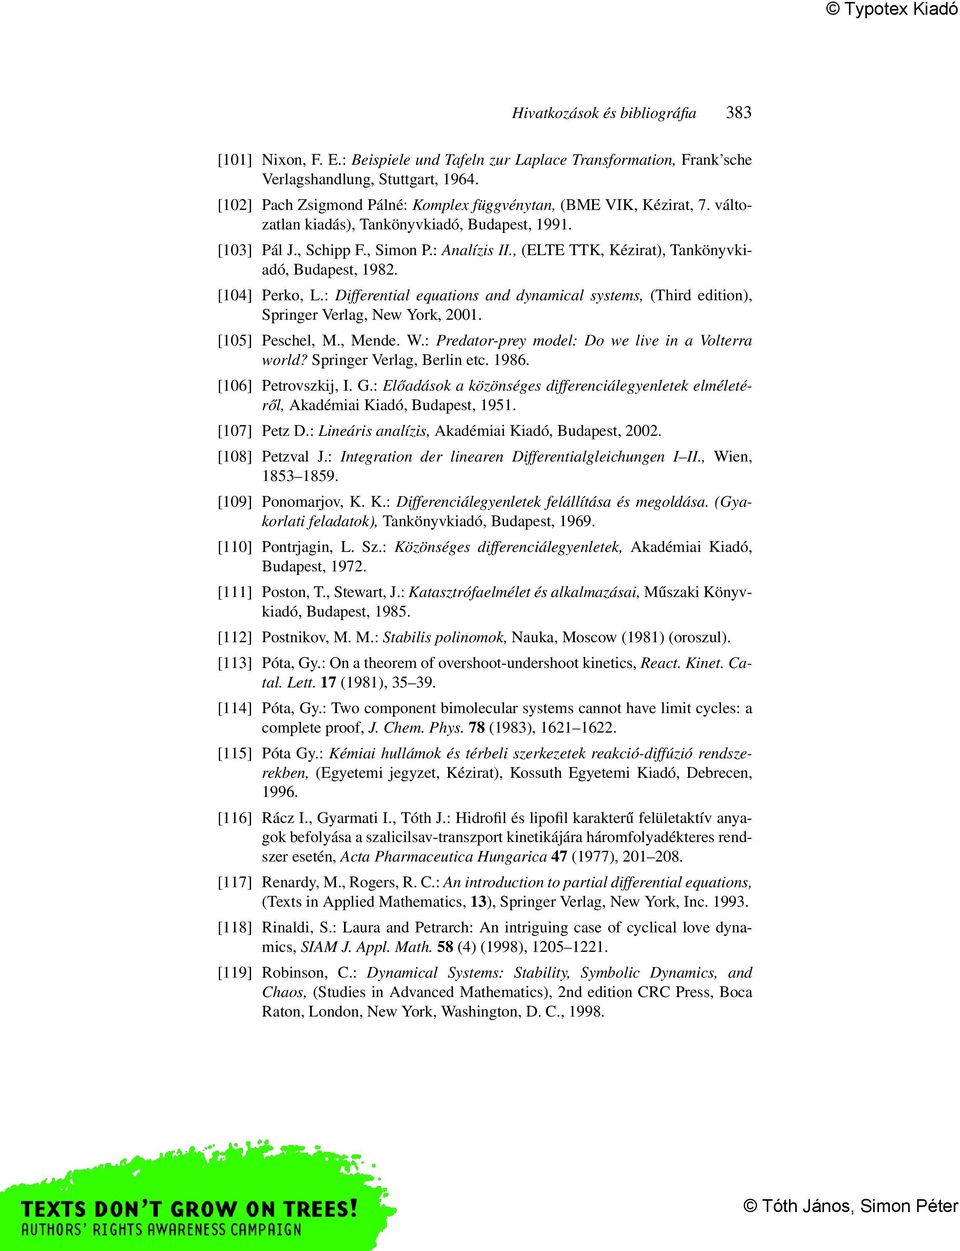 , (ELTE TTK, Kézirat), Tankönyvkiadó, Budapest, 1982. [104] Perko, L.: Differential equations and dynamical systems, (Third edition), Springer Verlag, New York, 2001. [105] Peschel, M., Mende. W.